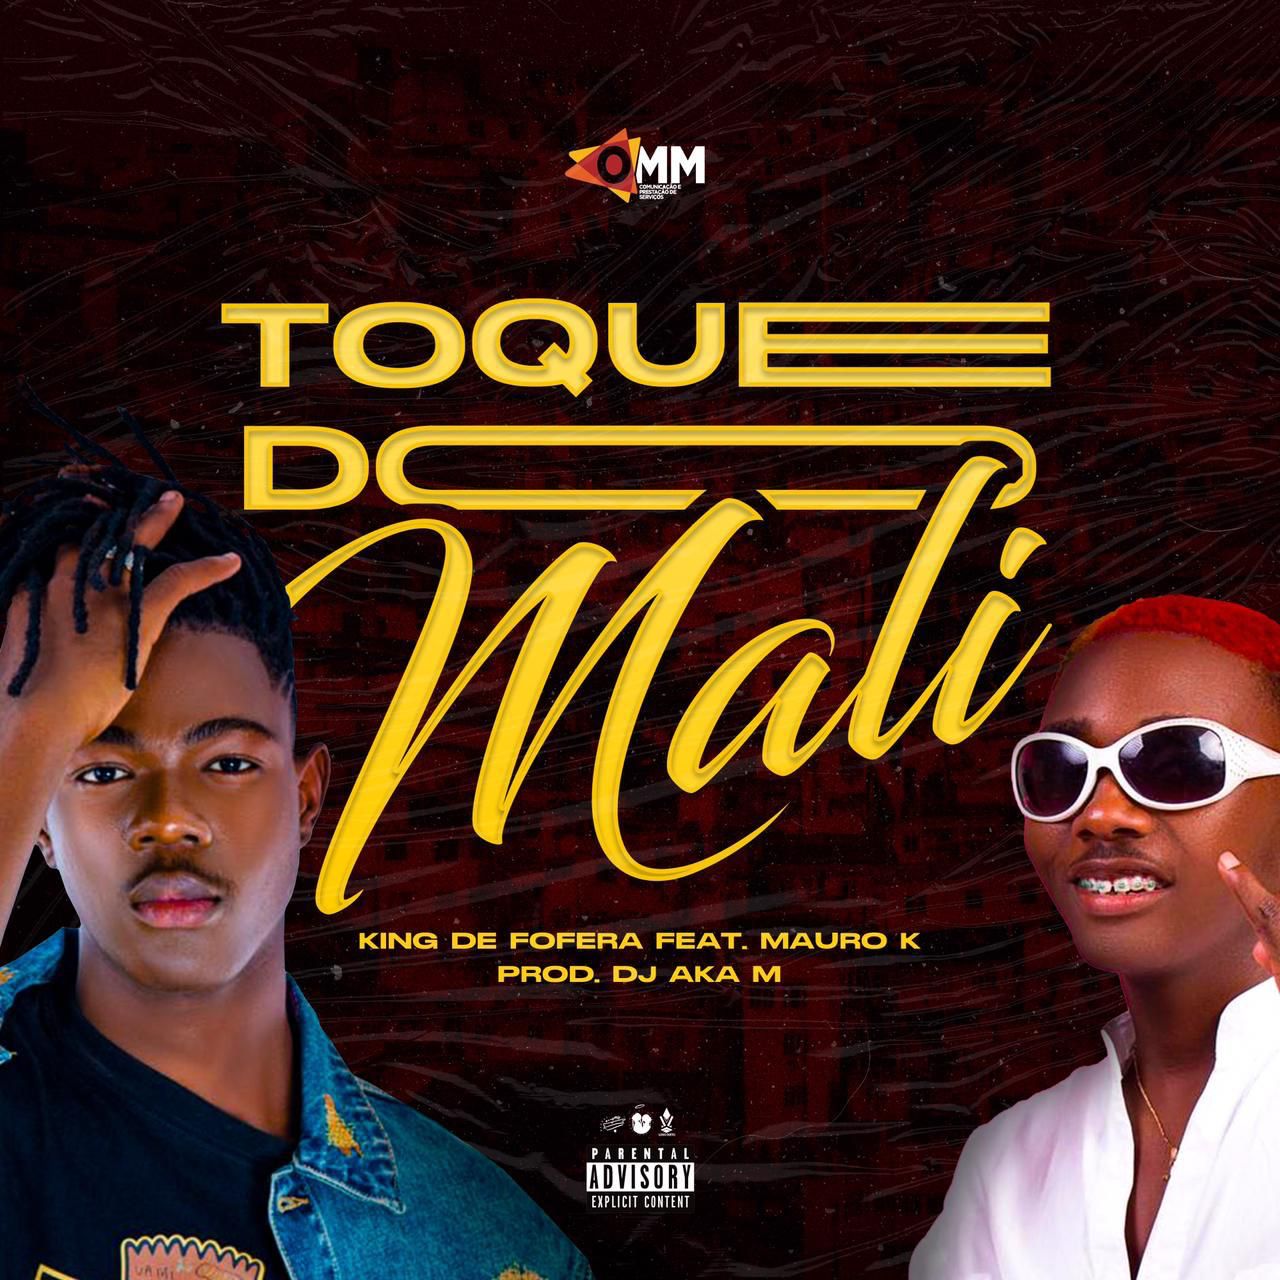 King Defofera x Mauro K x DJ Aka-M – Toque do Mali